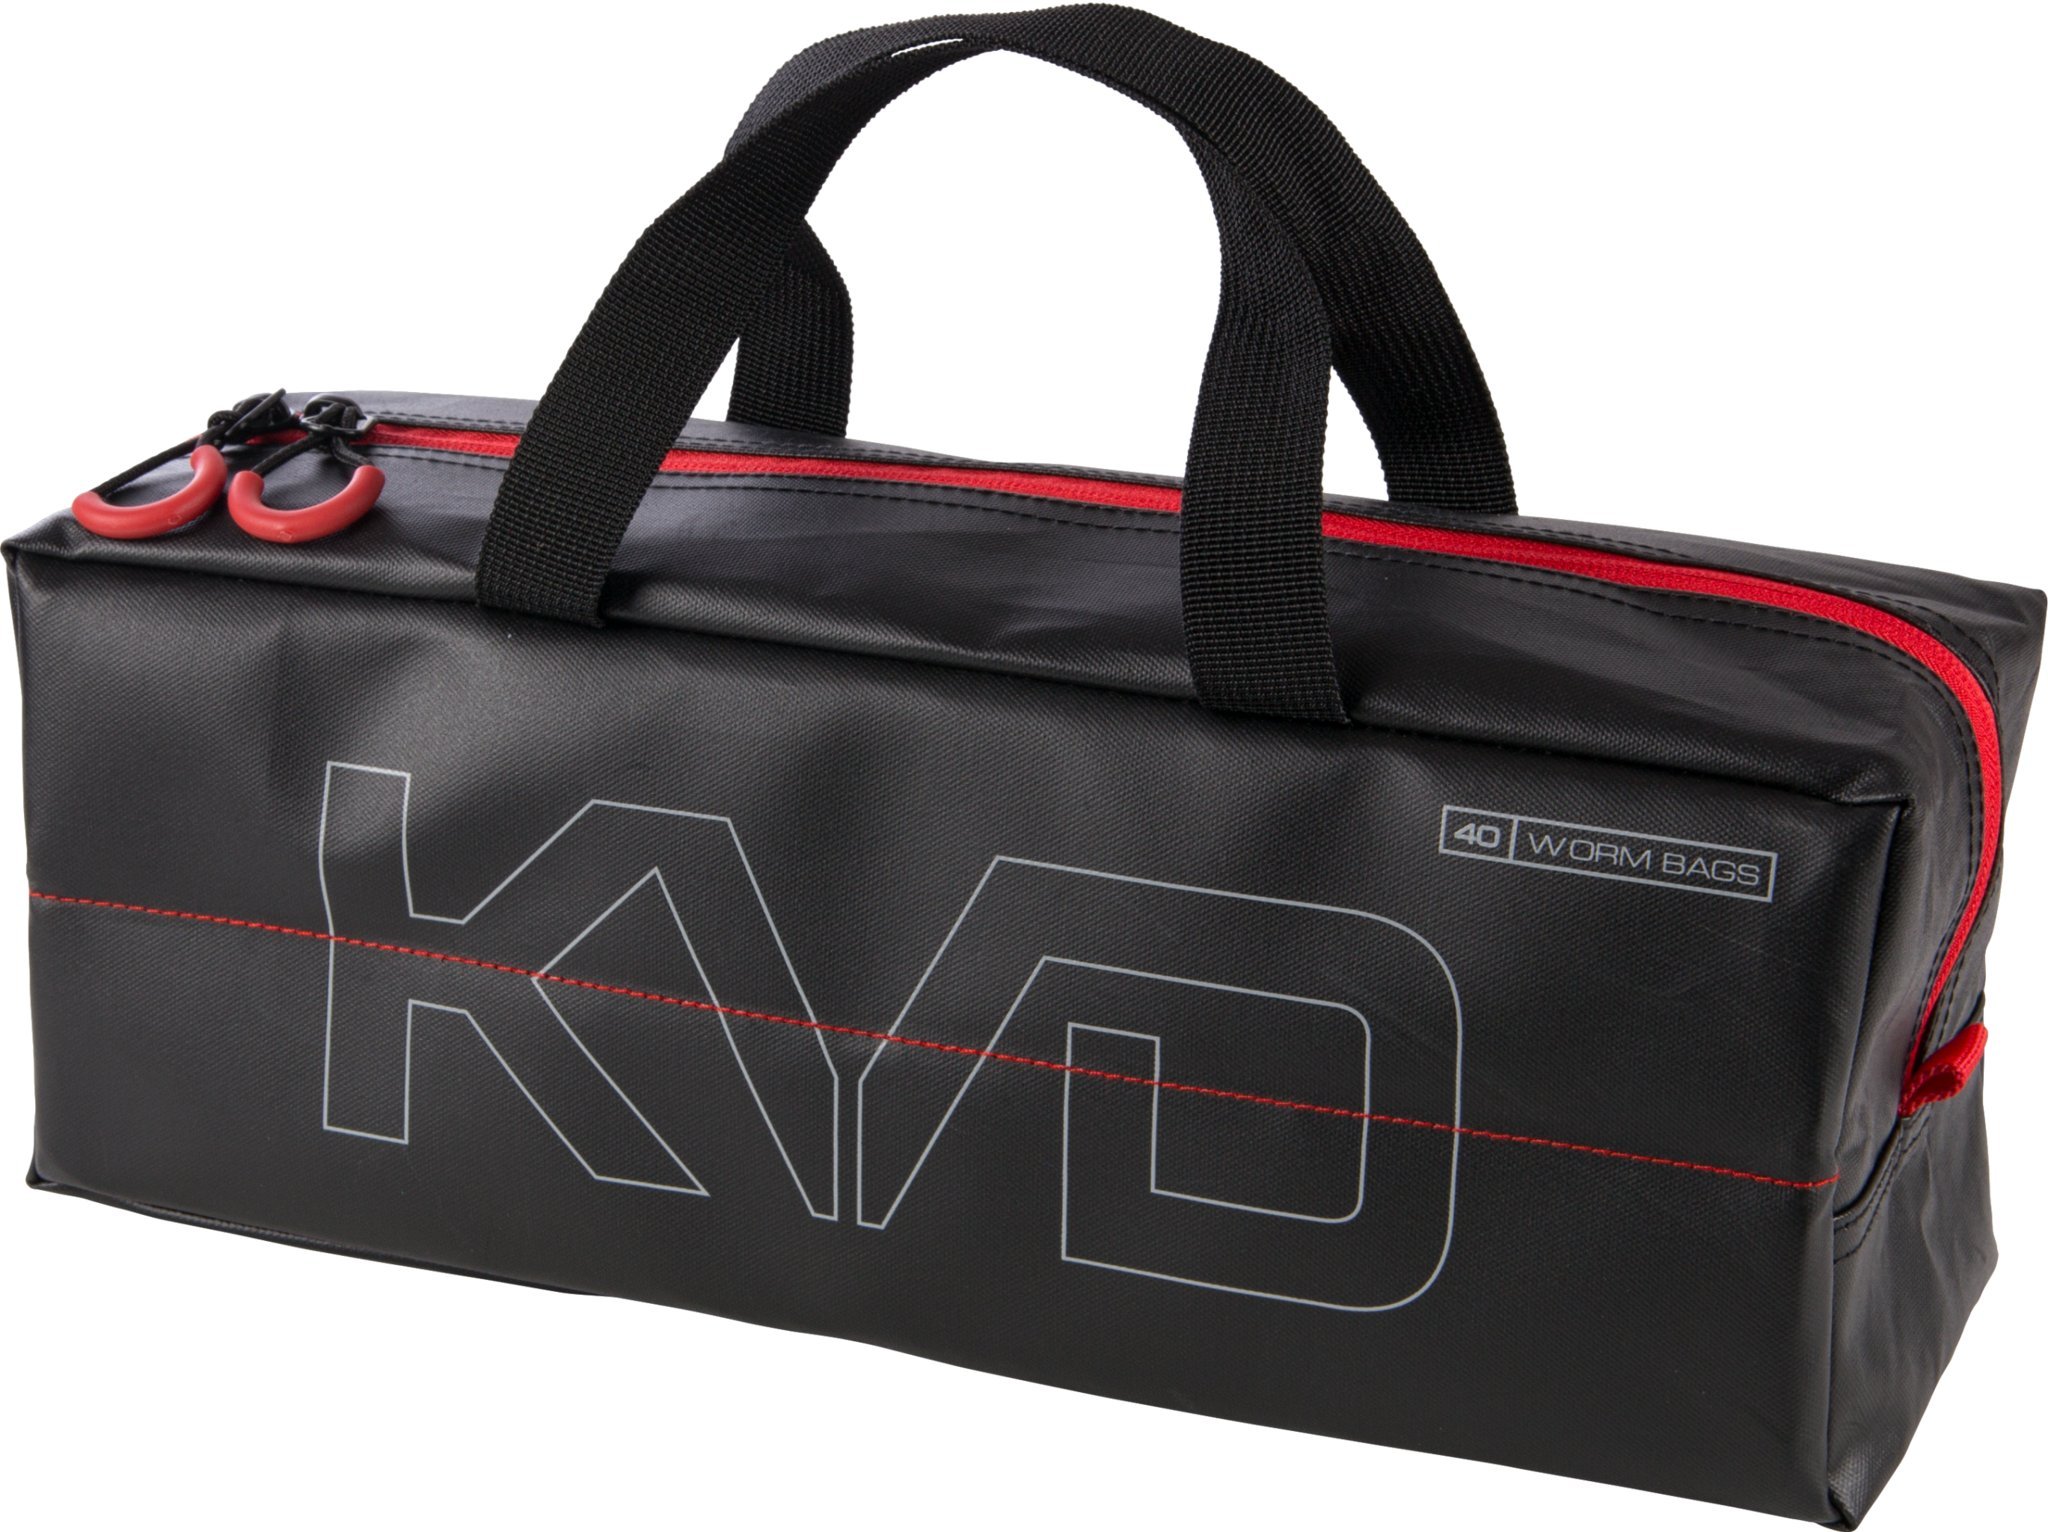 Plano PLAB11700 KVD Worm Speedbag (Holds Worm Bag) Holds 40 Bags